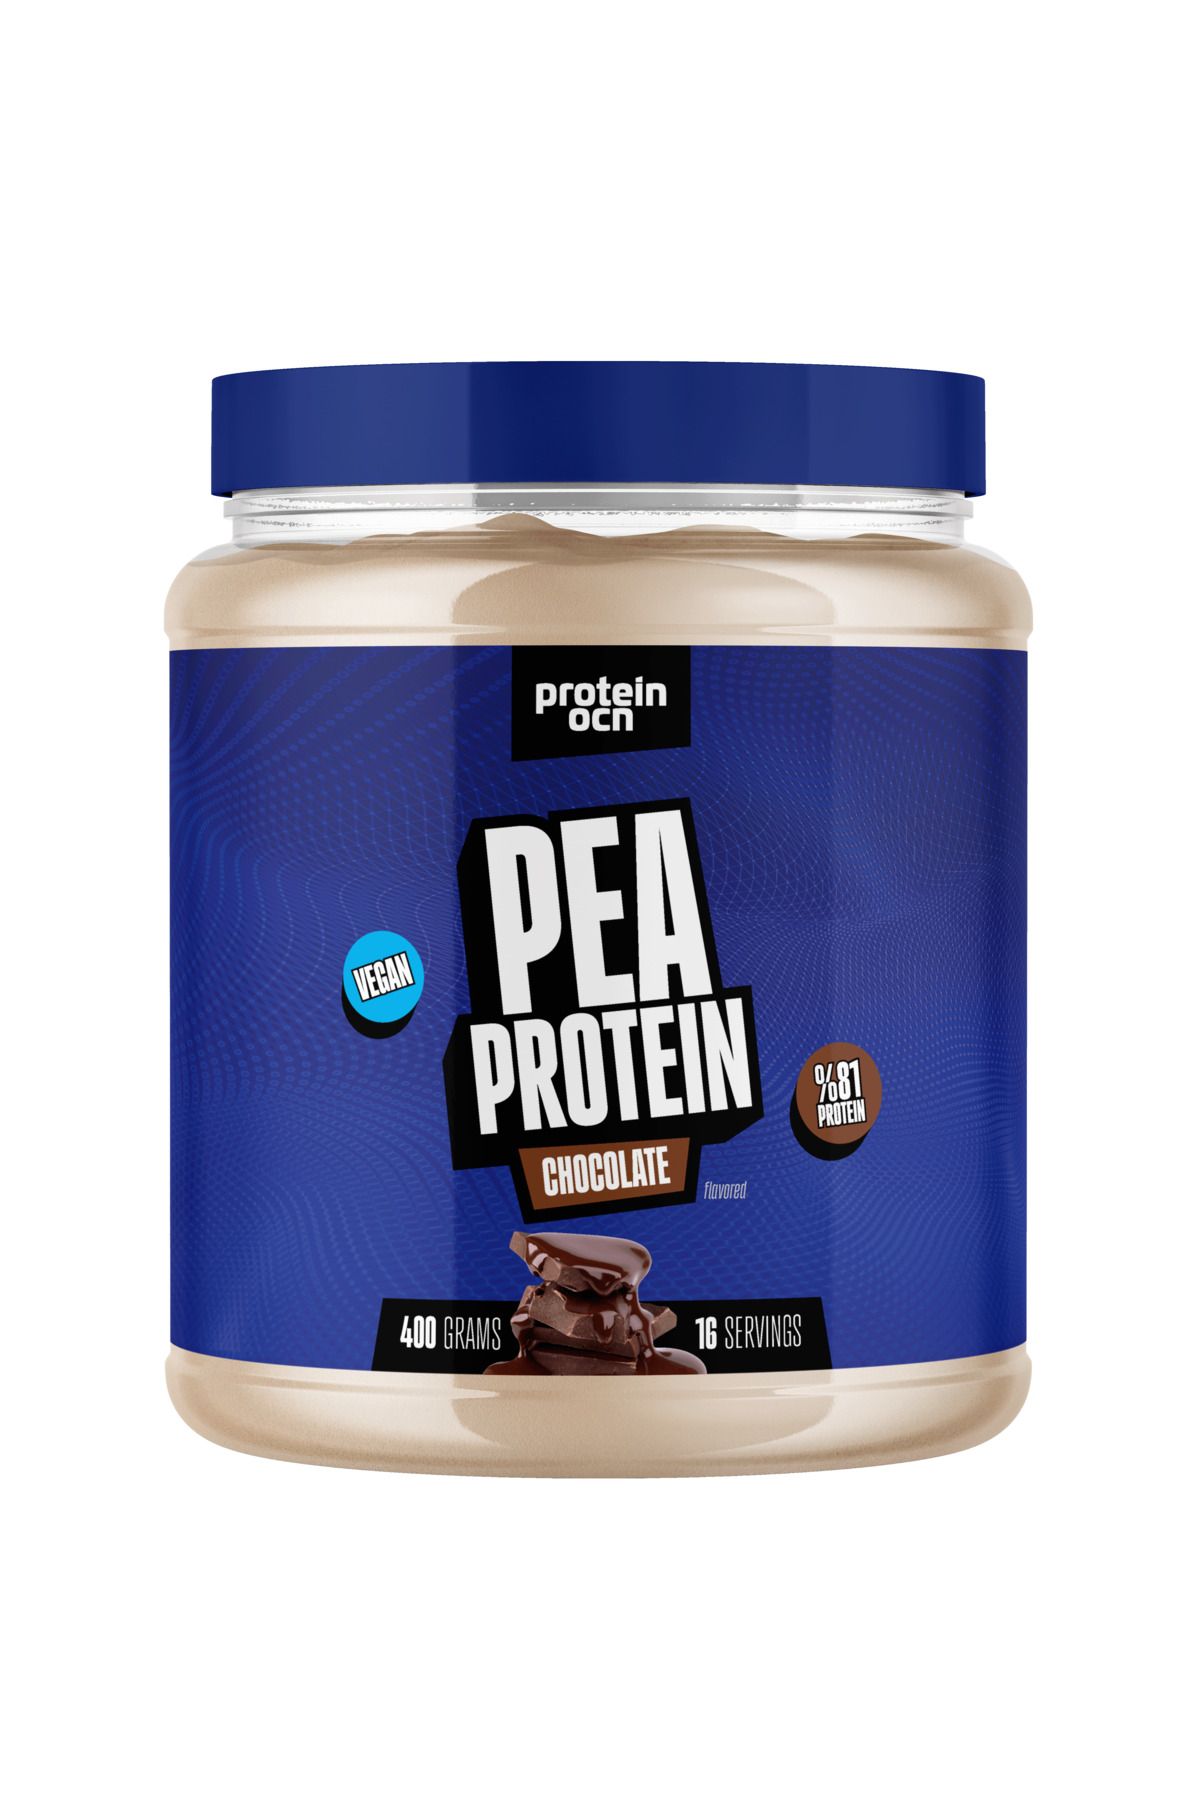 Proteinocean Pea Proteın Çikolata - 400g - 16 Servis